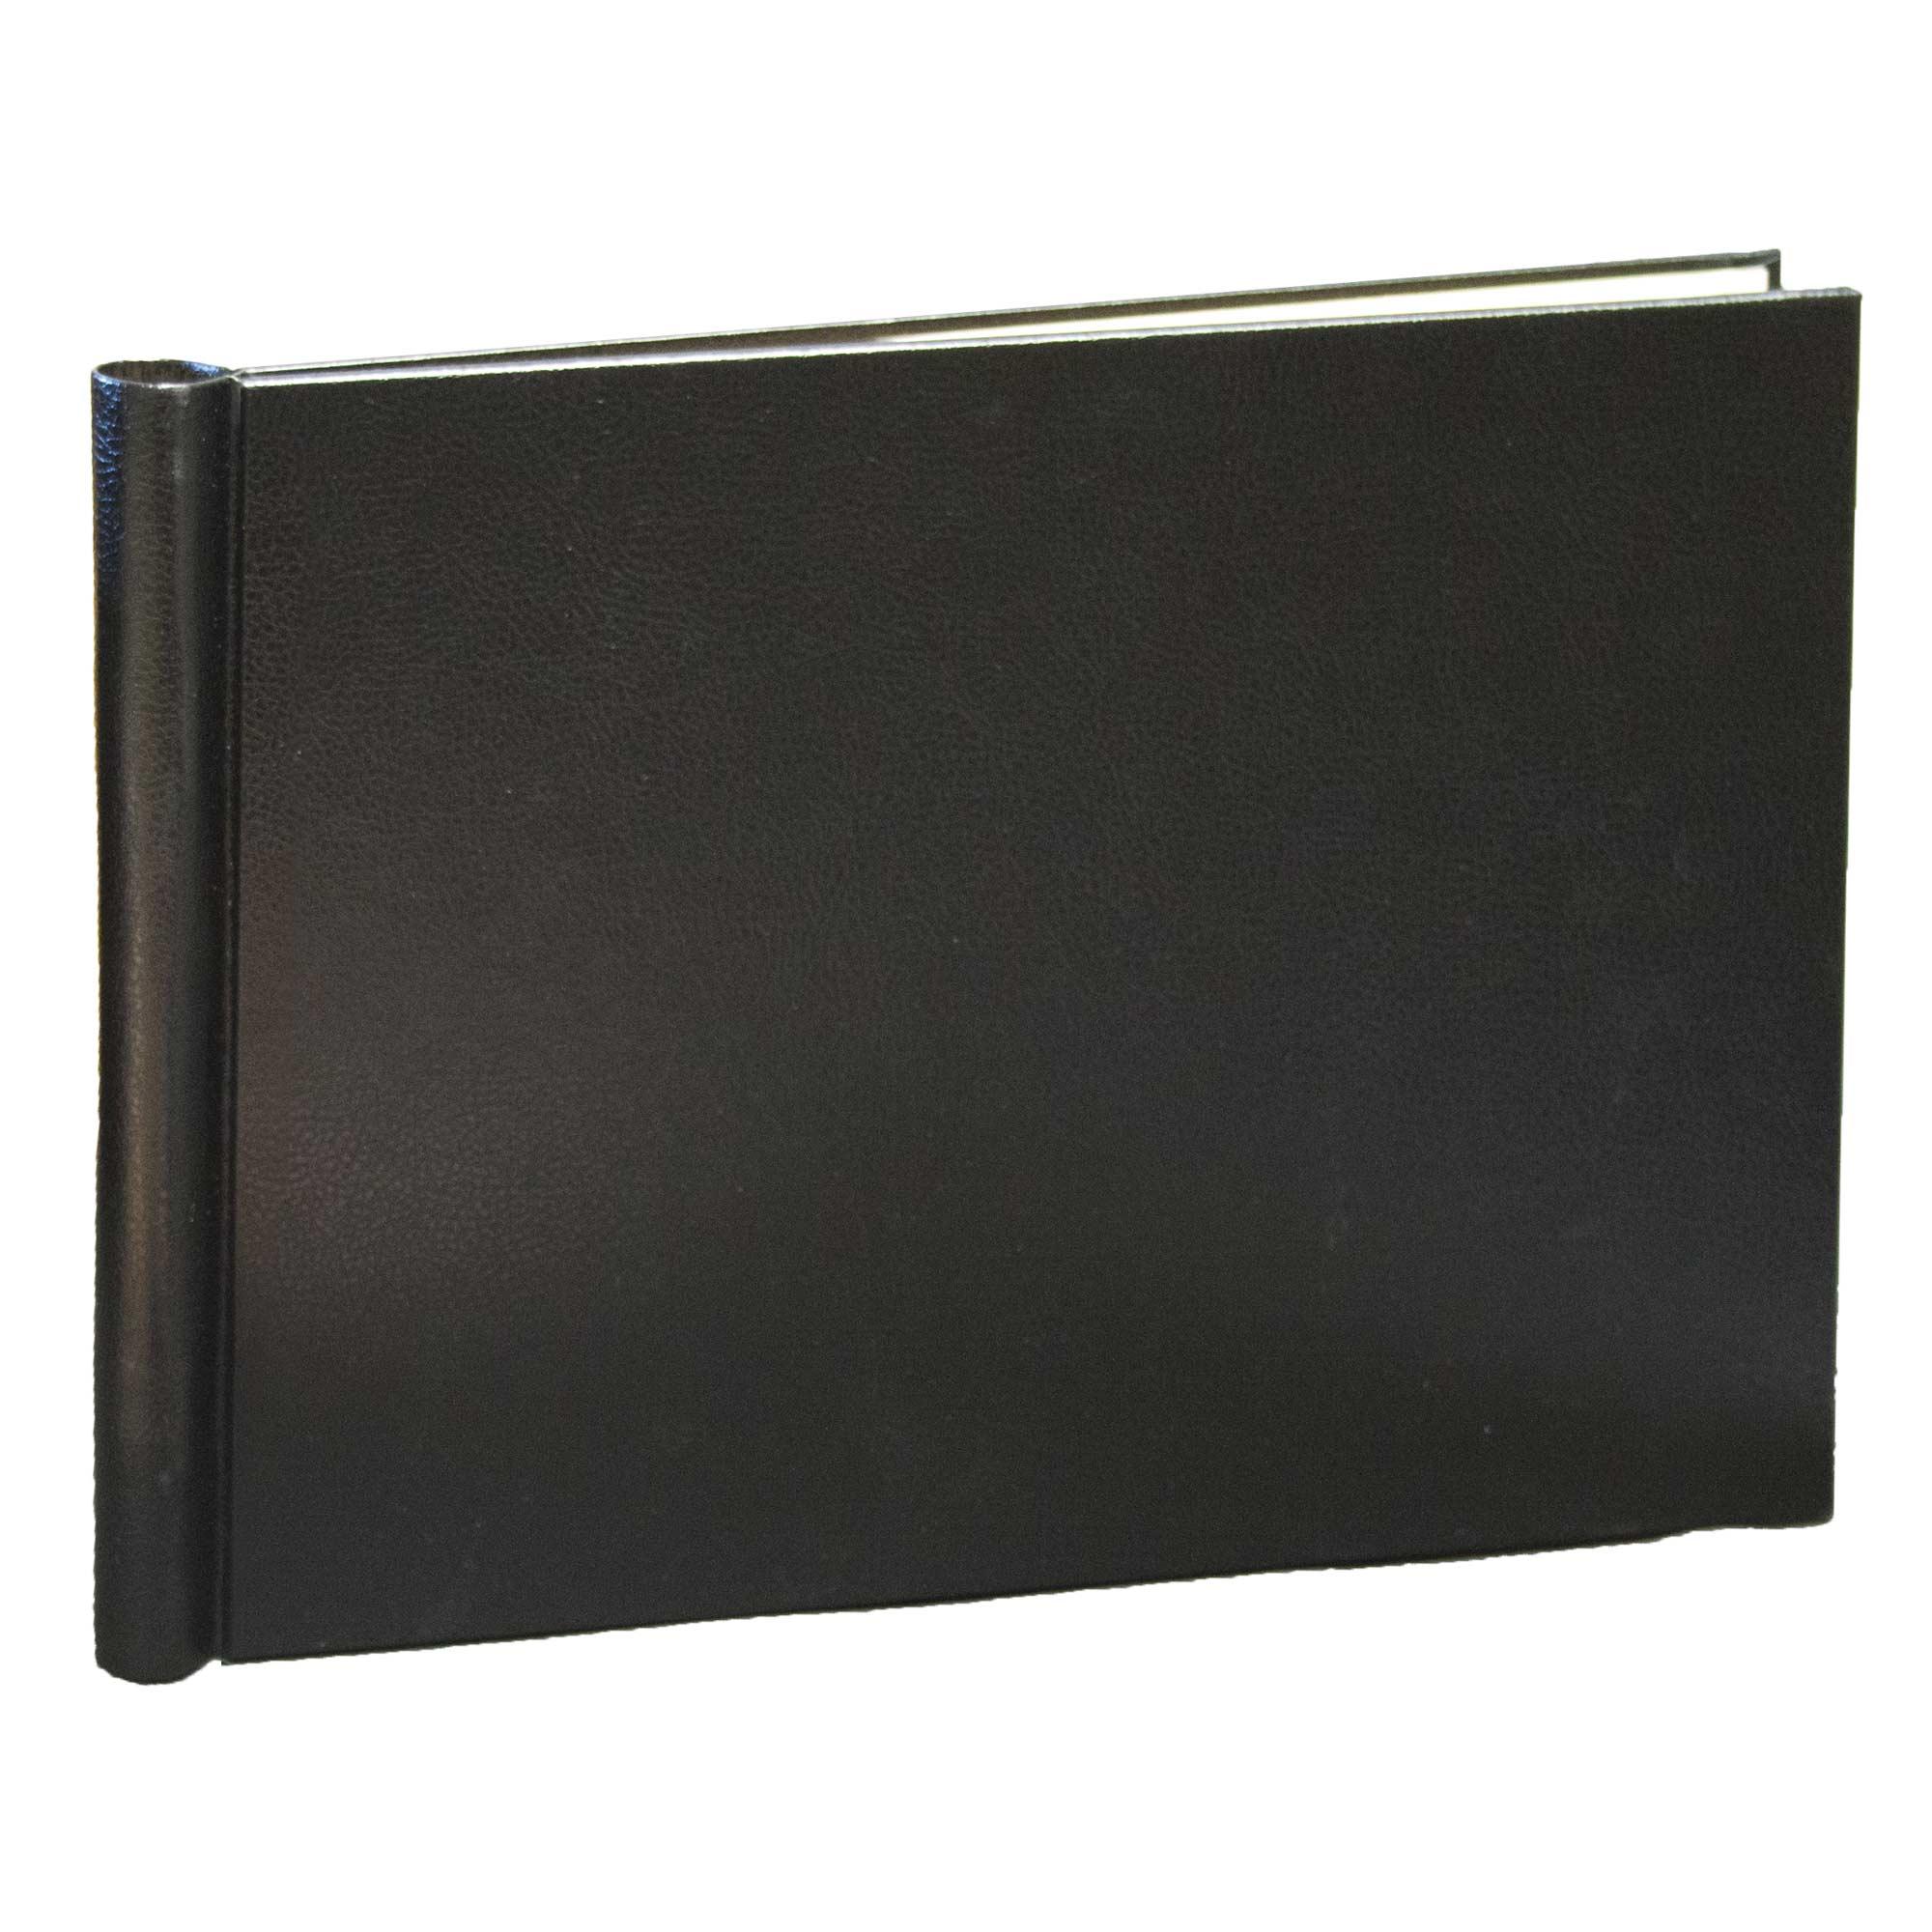 A4 Landscape Brampton Leather look Springback Folder - Black